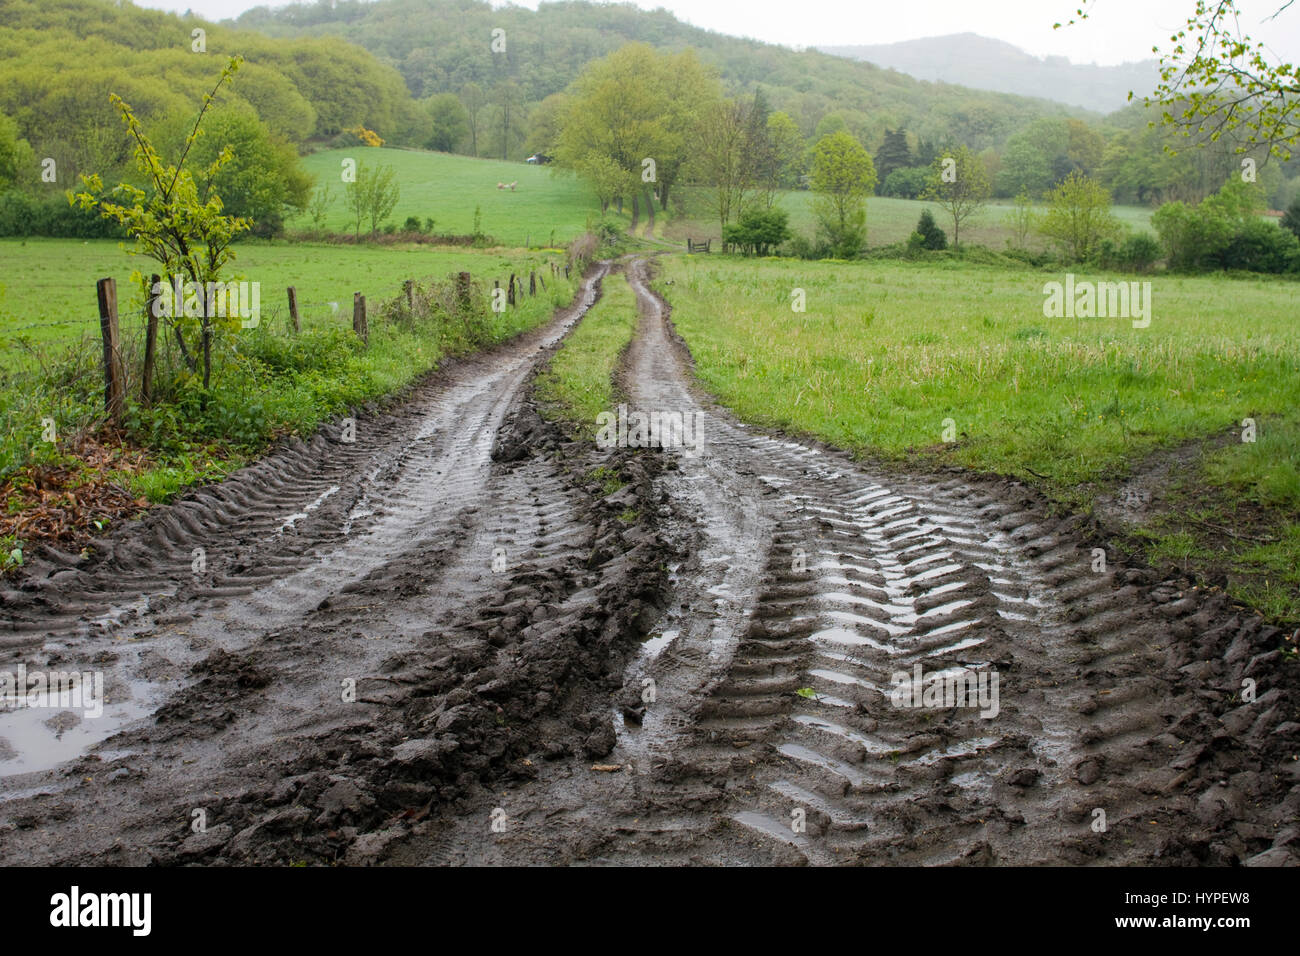 France, South-Western France, Haut-Languedoc Regional Nature Park, Montagne Noire, rubber tire marks on a wet path Stock Photo